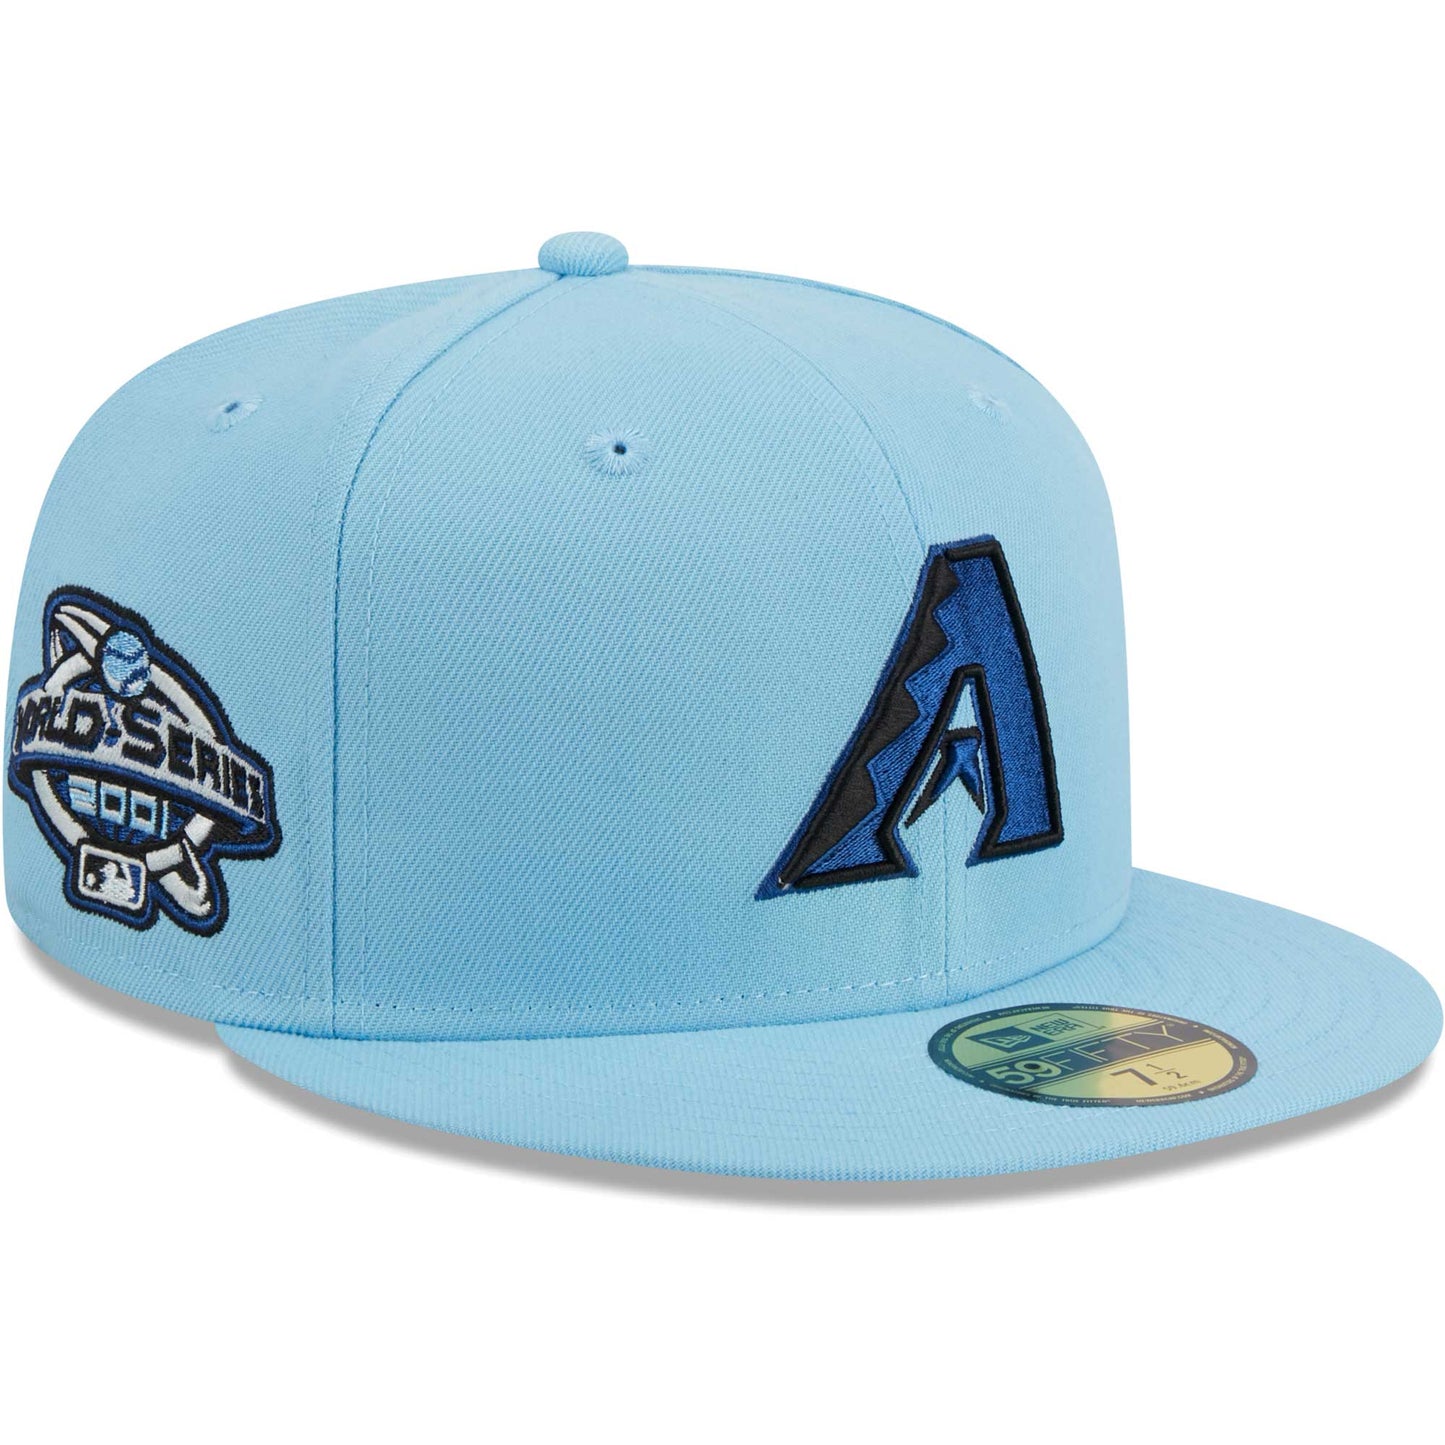 Arizona Diamondbacks New Era 59FIFTY Fitted Hat - Light Blue